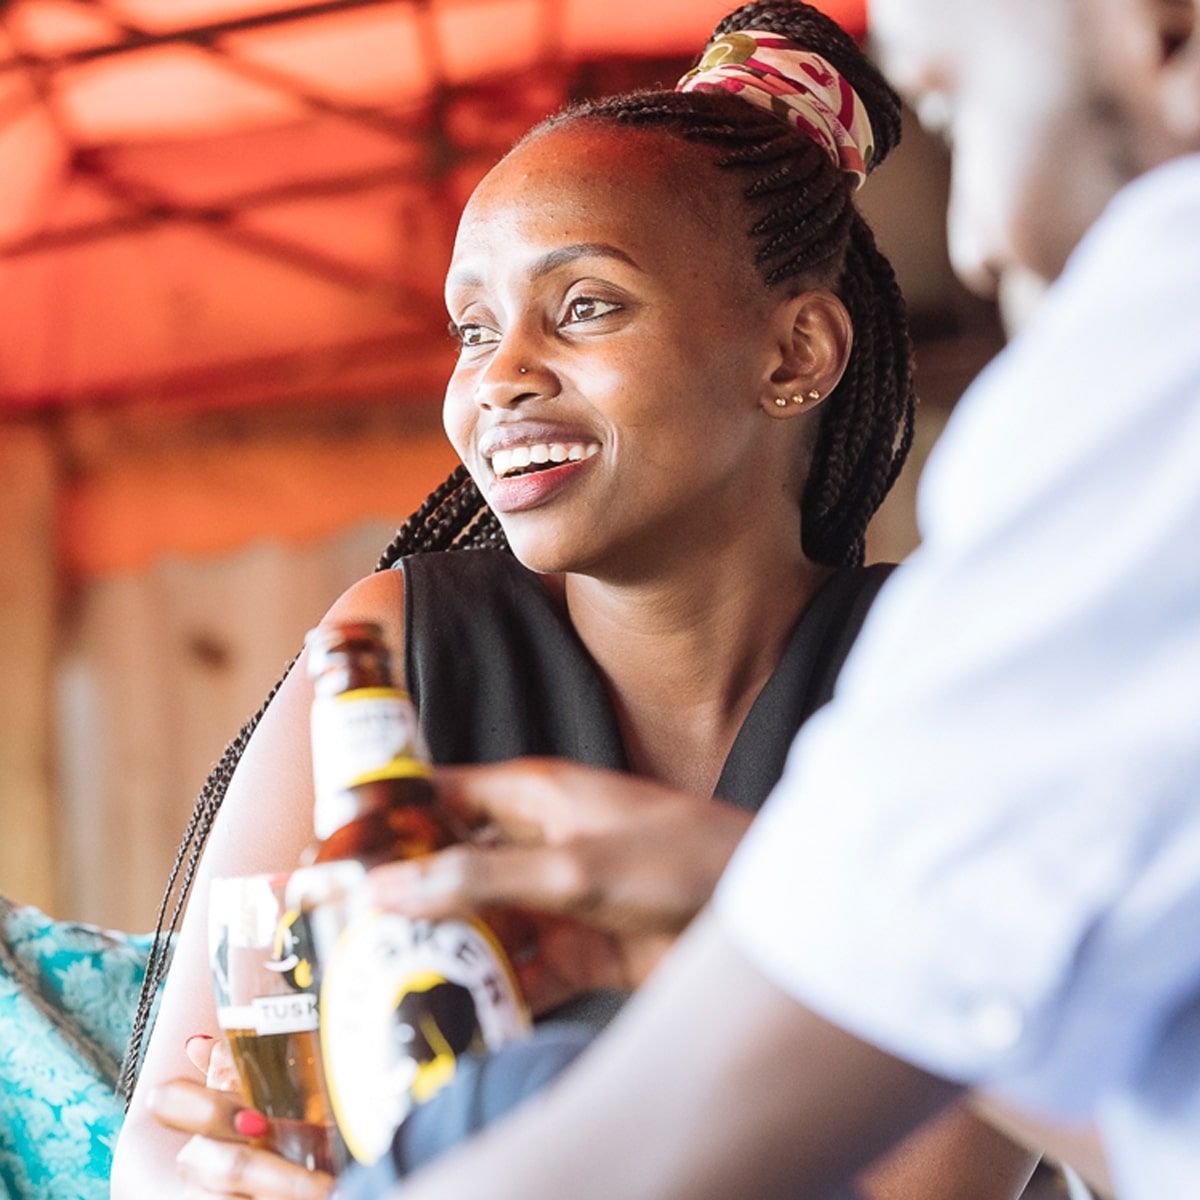 Responsible Drinking At Diageo Kenya